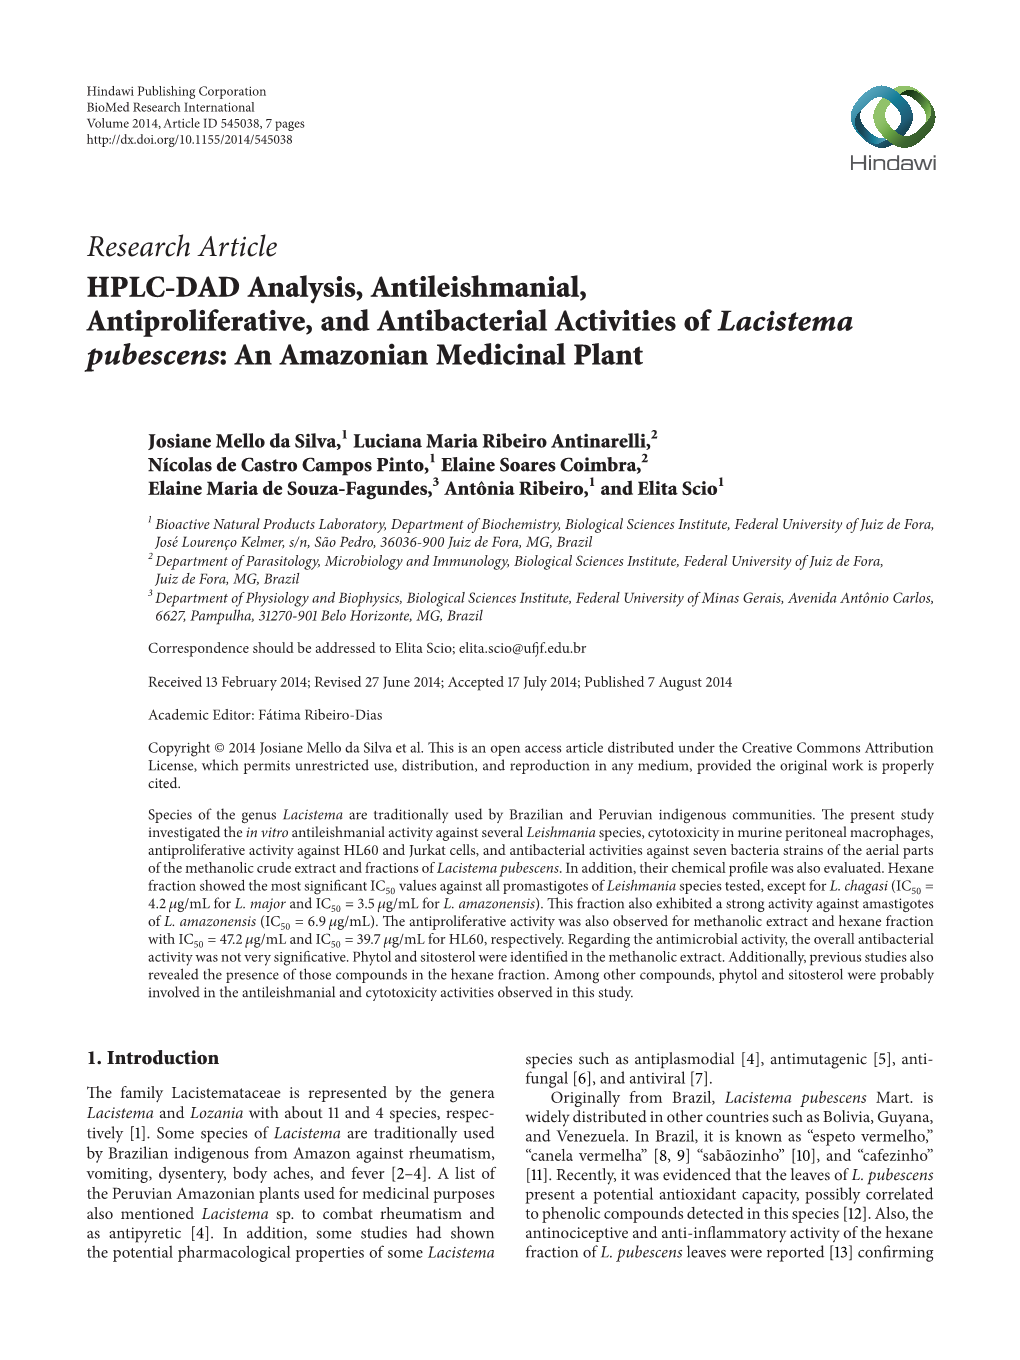 HPLC-DAD Analysis, Antileishmanial, Antiproliferative, and Antibacterial Activities of Lacistema Pubescens: an Amazonian Medicinal Plant